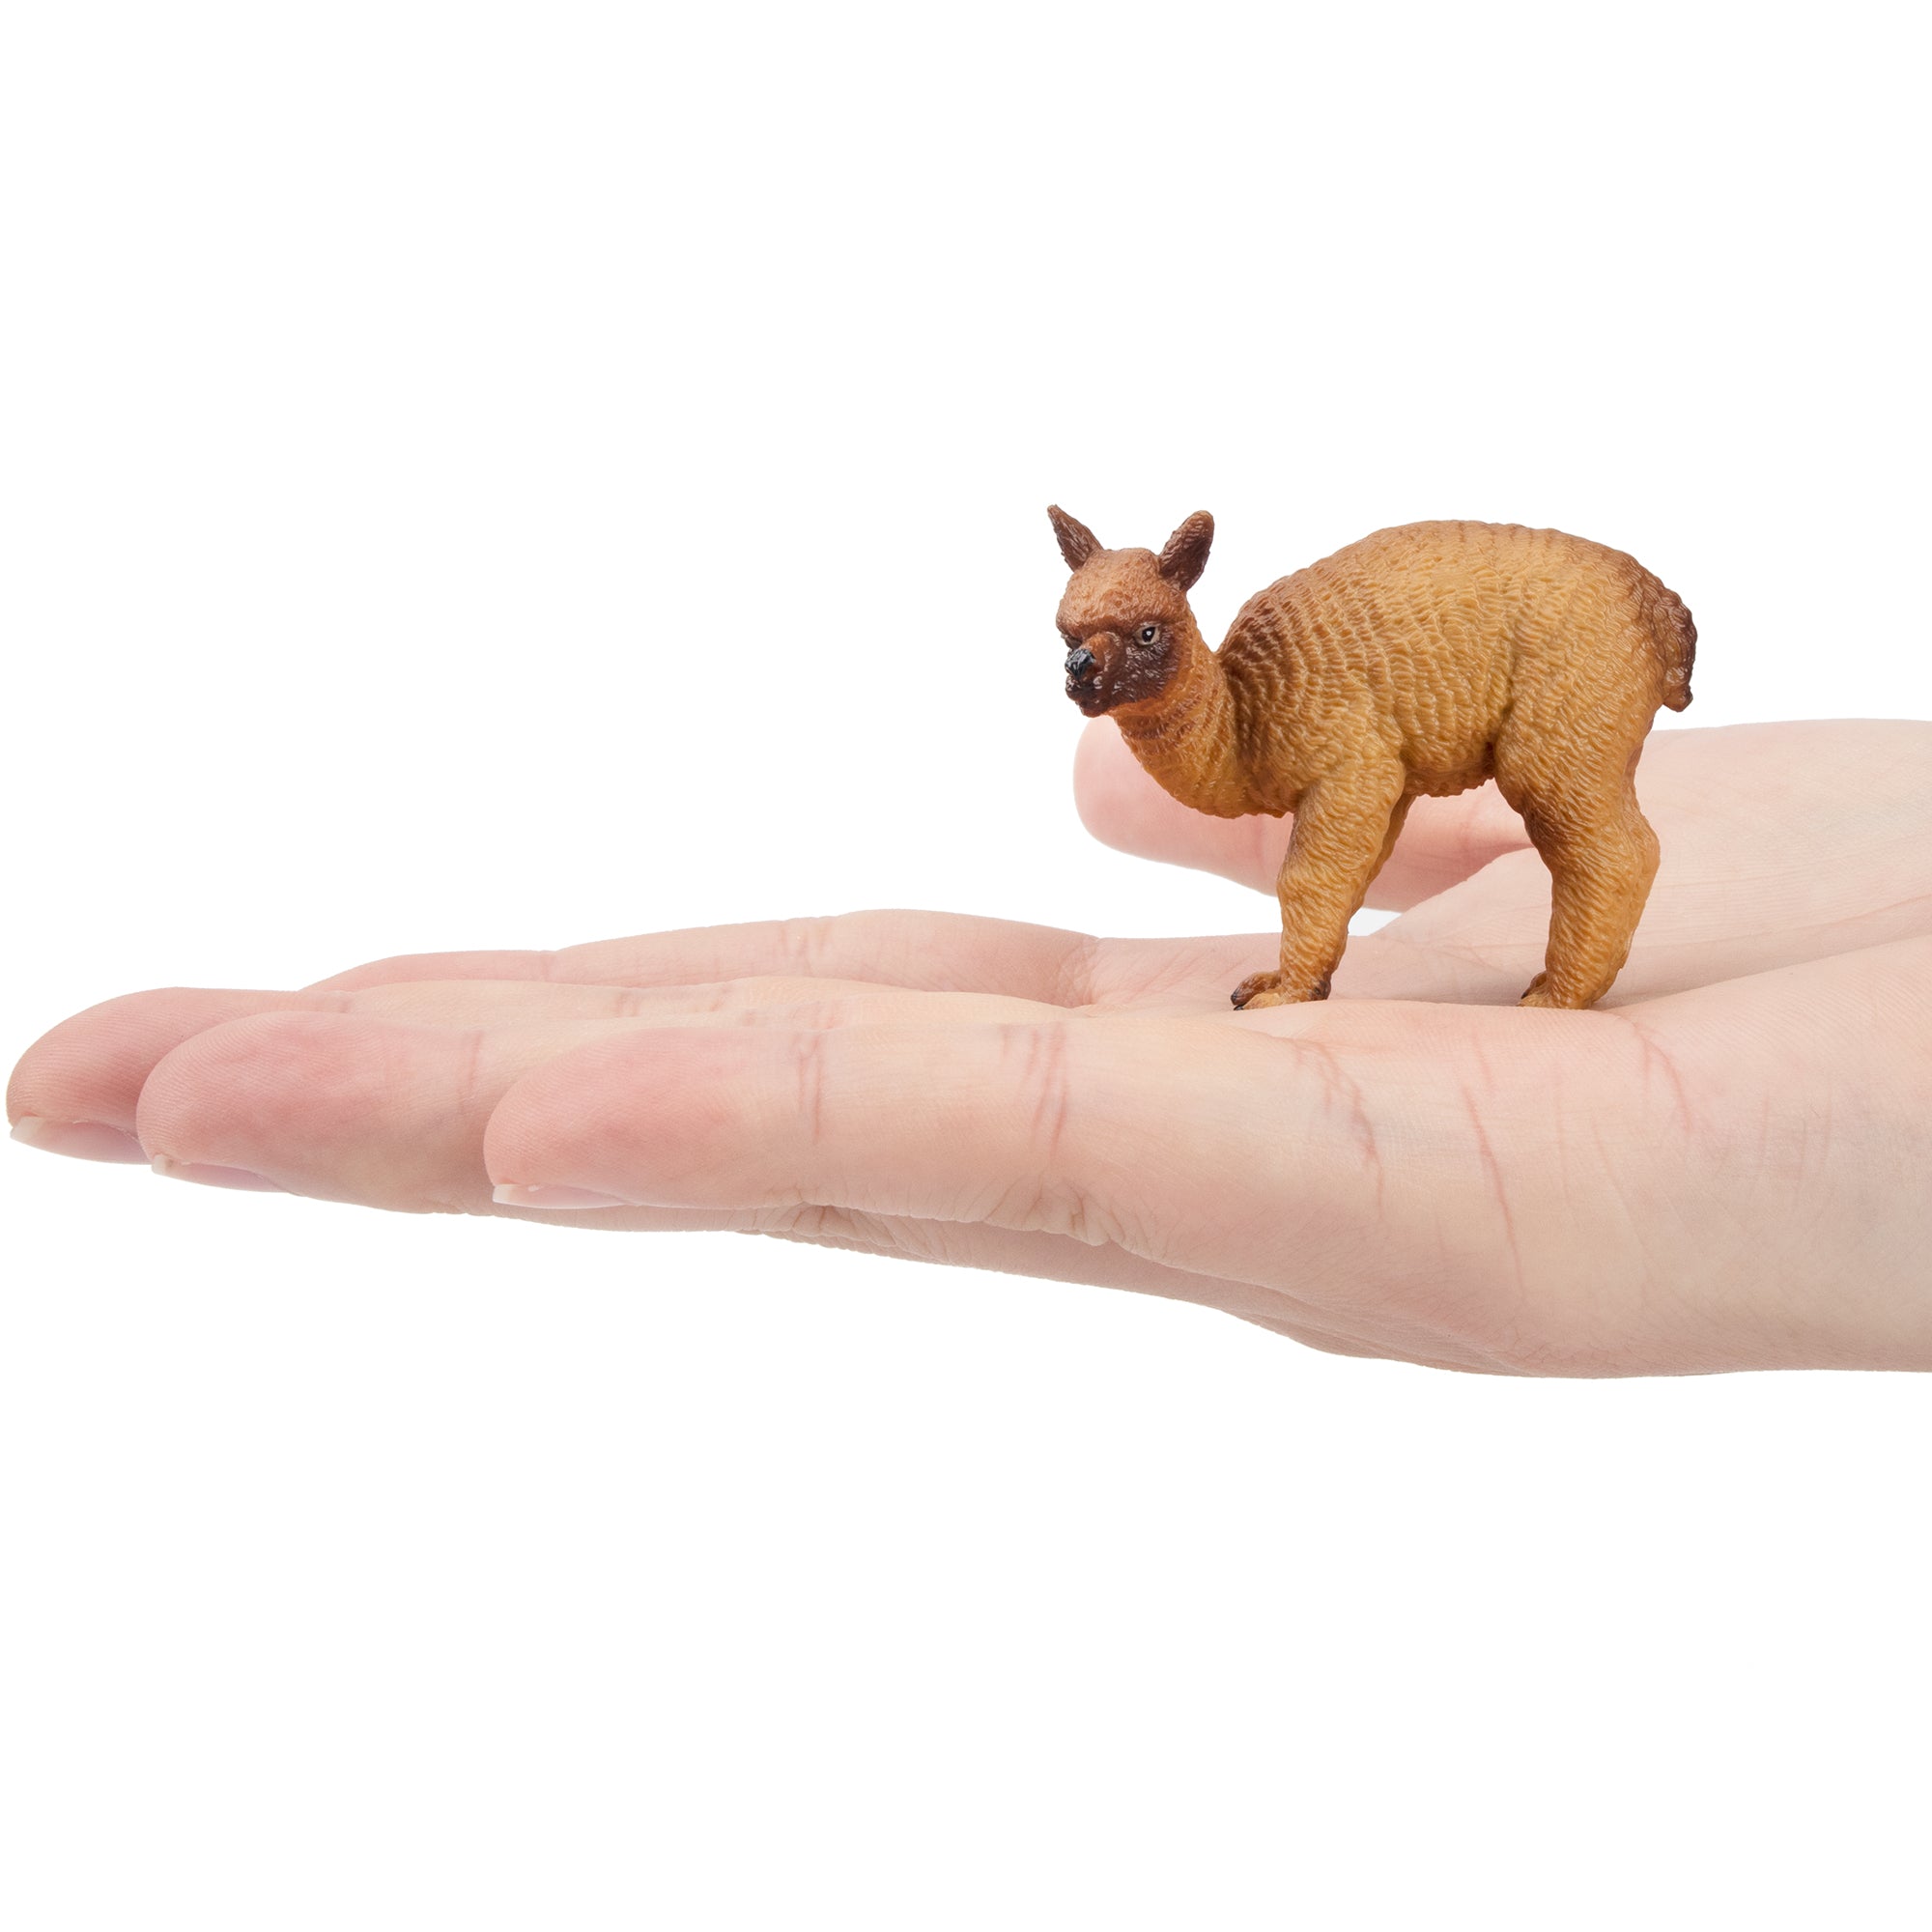 Toymany Standing Brown Alpaca Baby Figurine Toy-on hand